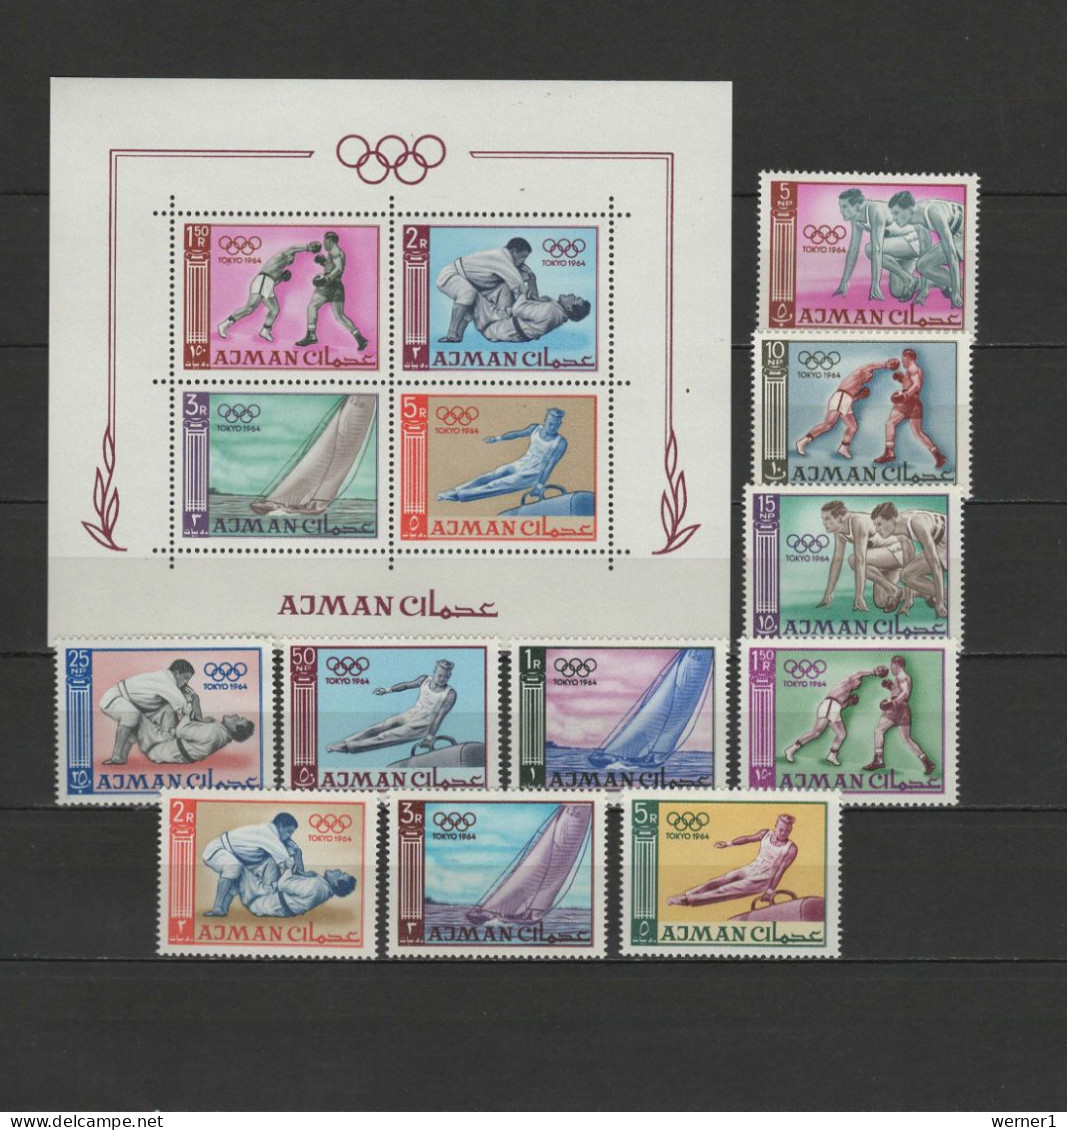 Ajman 1965 Olympic Games Tokyo, Boxing, Judo, Athletics Etc. Set Of 10 + S/s MNH - Ete 1964: Tokyo